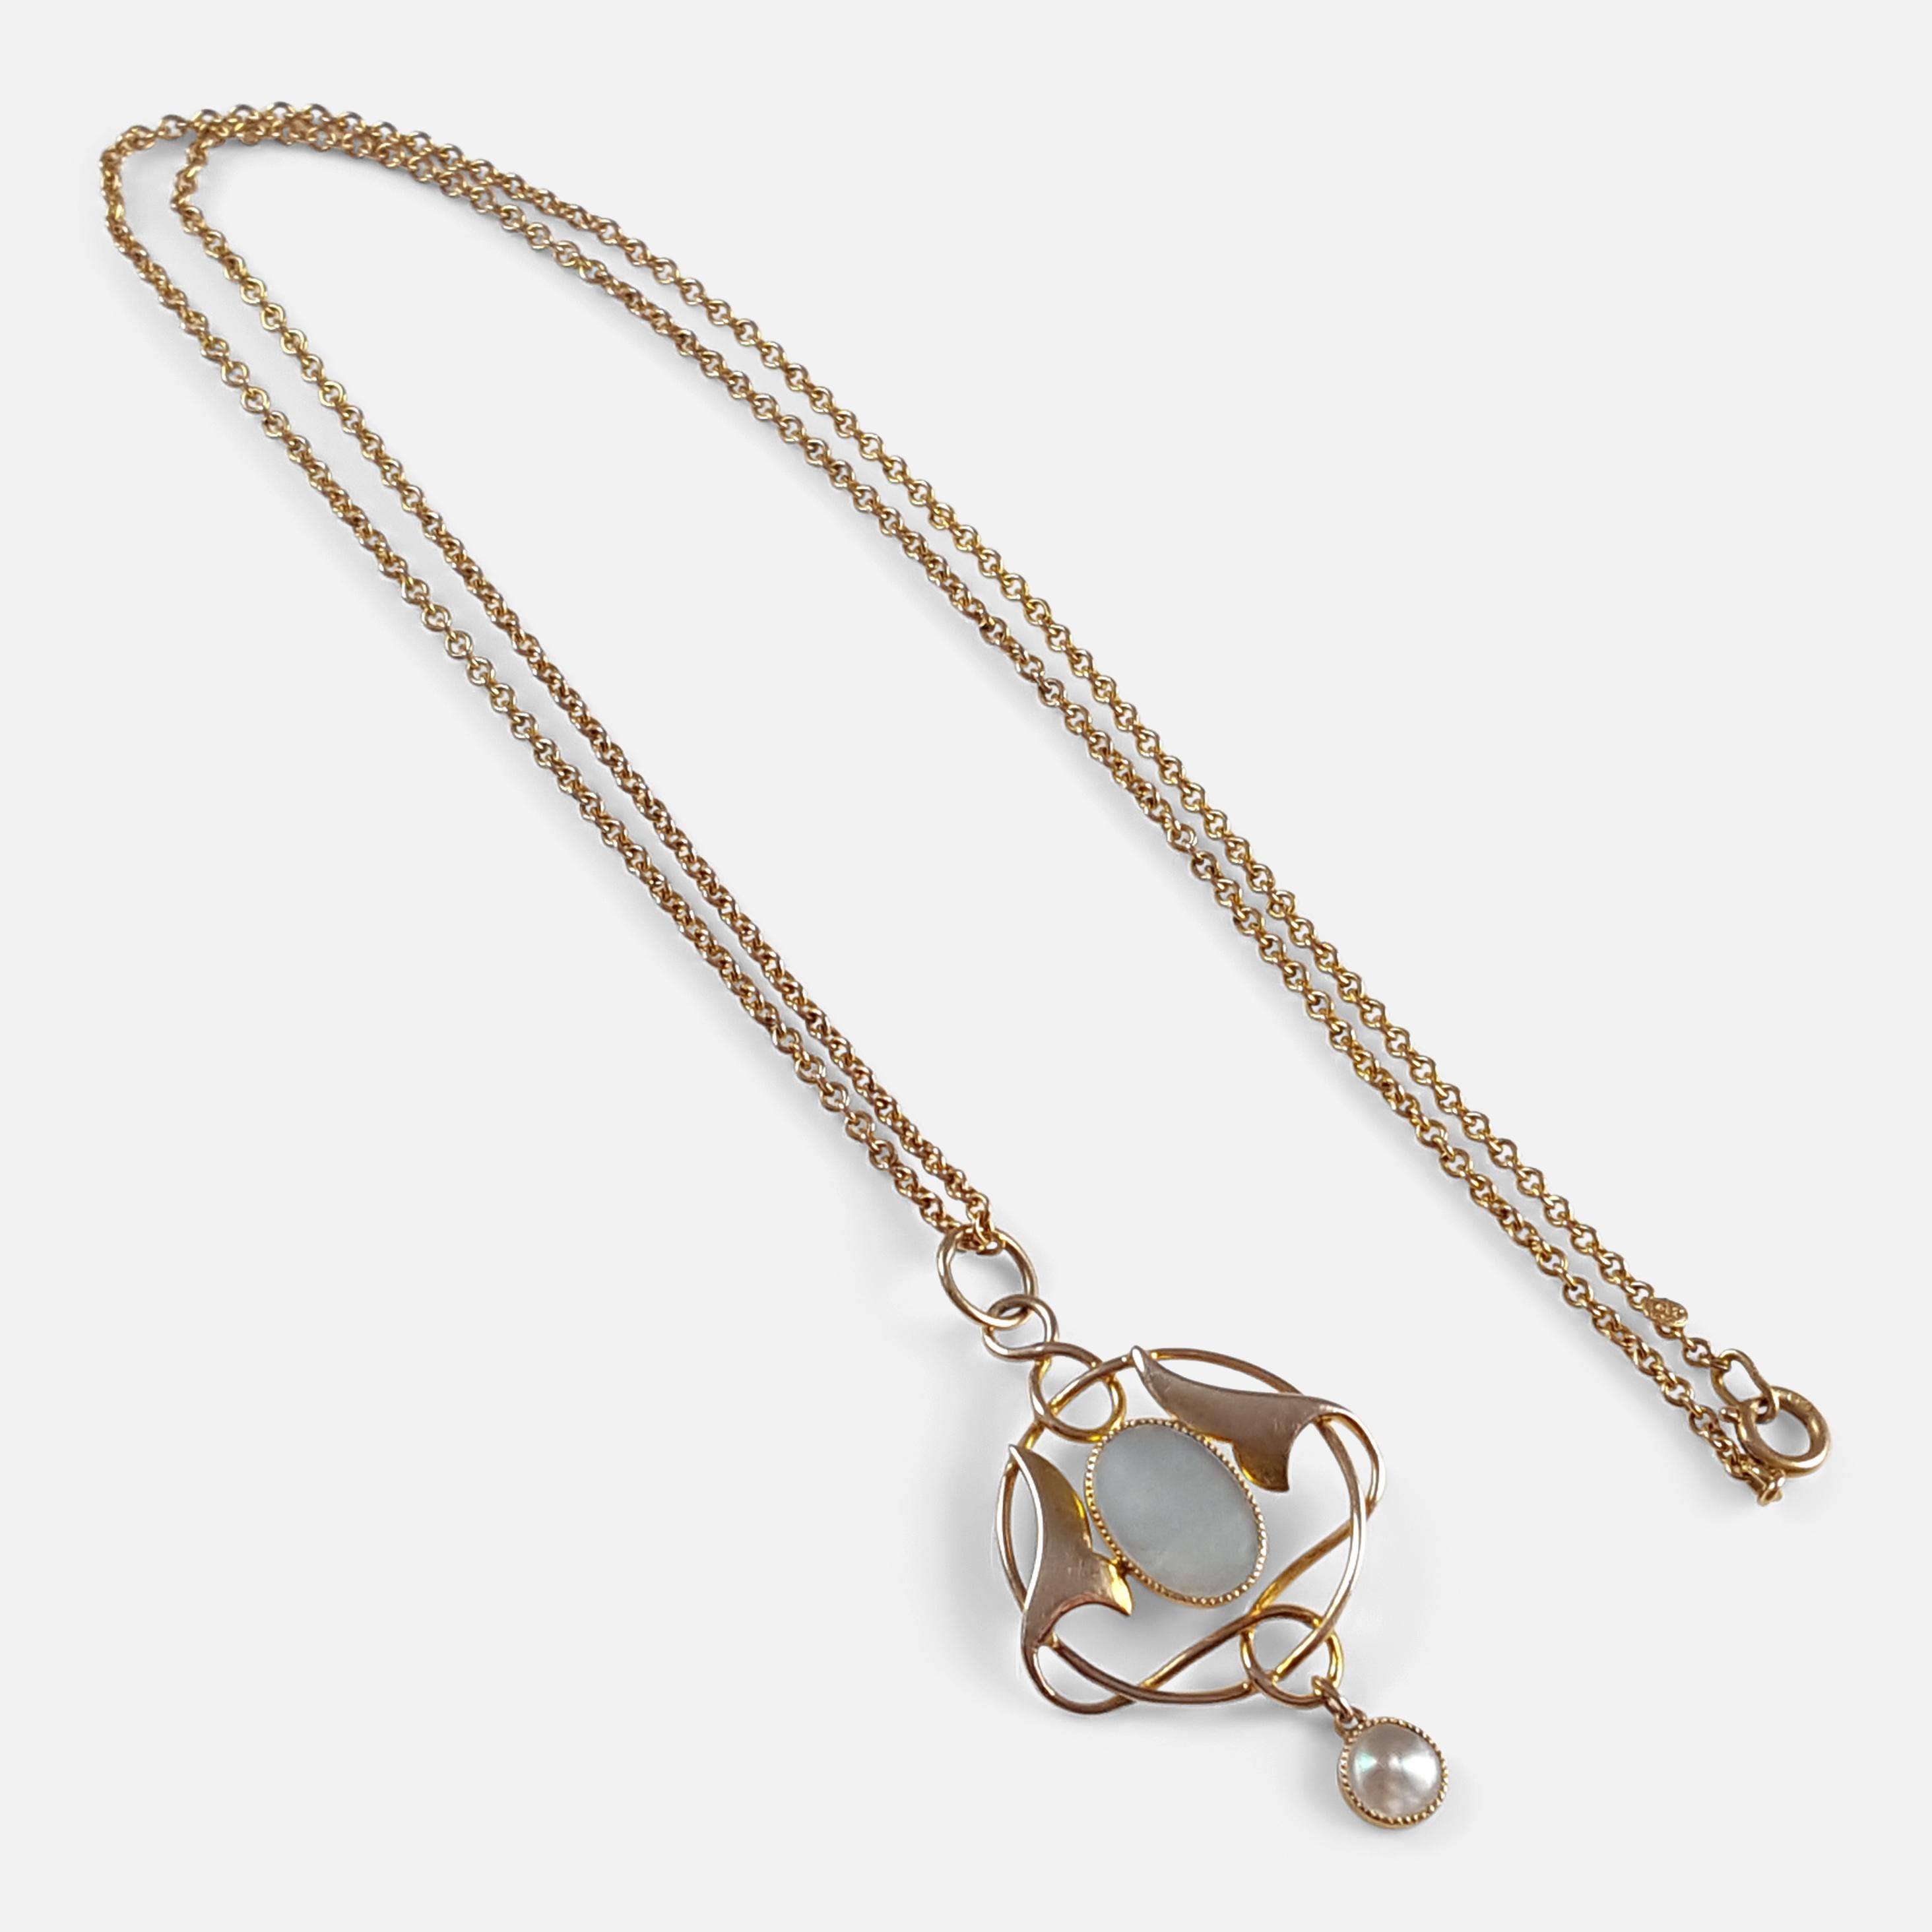 Art Nouveau Murrle Bennett & Co 9 Karat Gold and Pearl Pendant with Chain 1